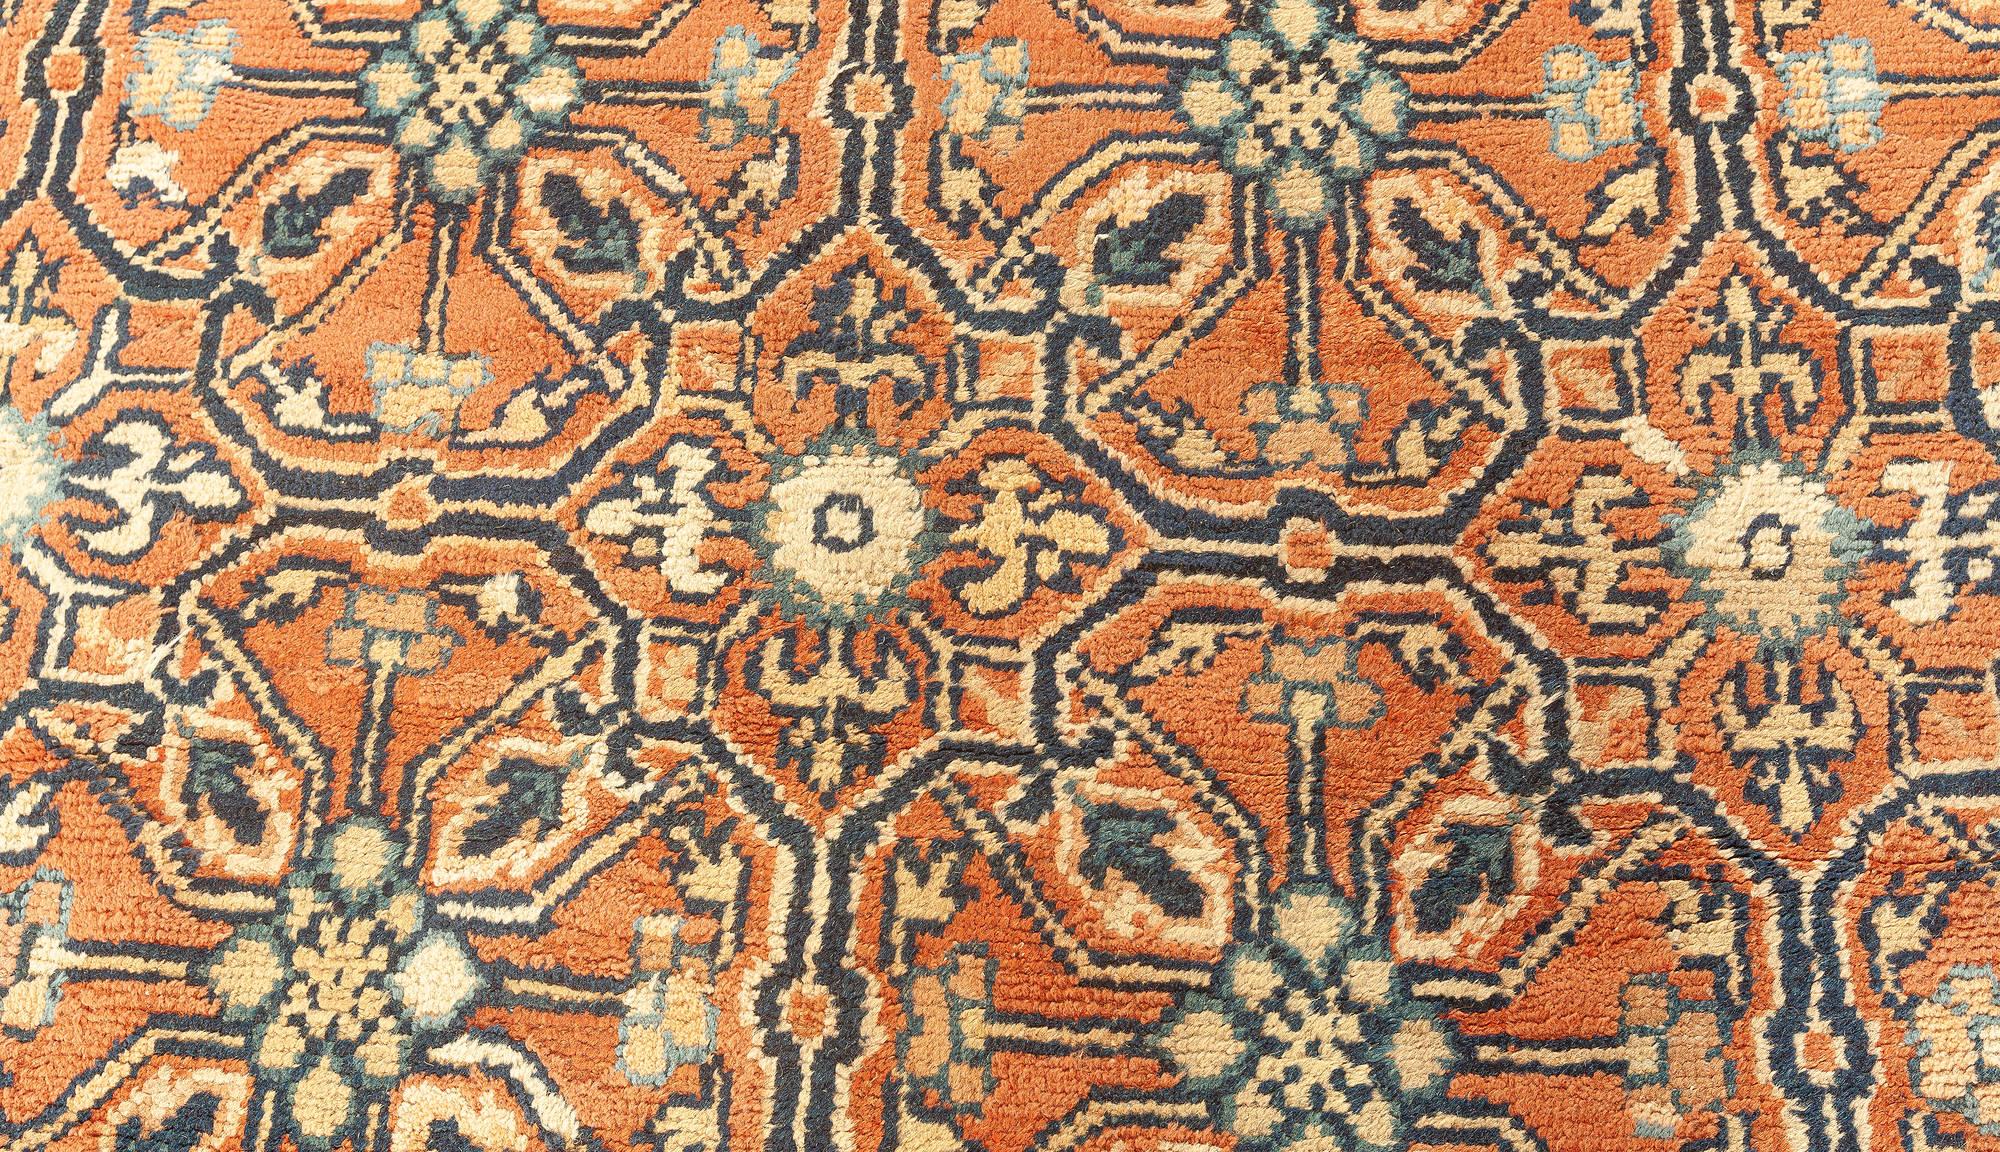 19th century central Asian Khotan samarkand handwoven wool carpet
Size: 12'1